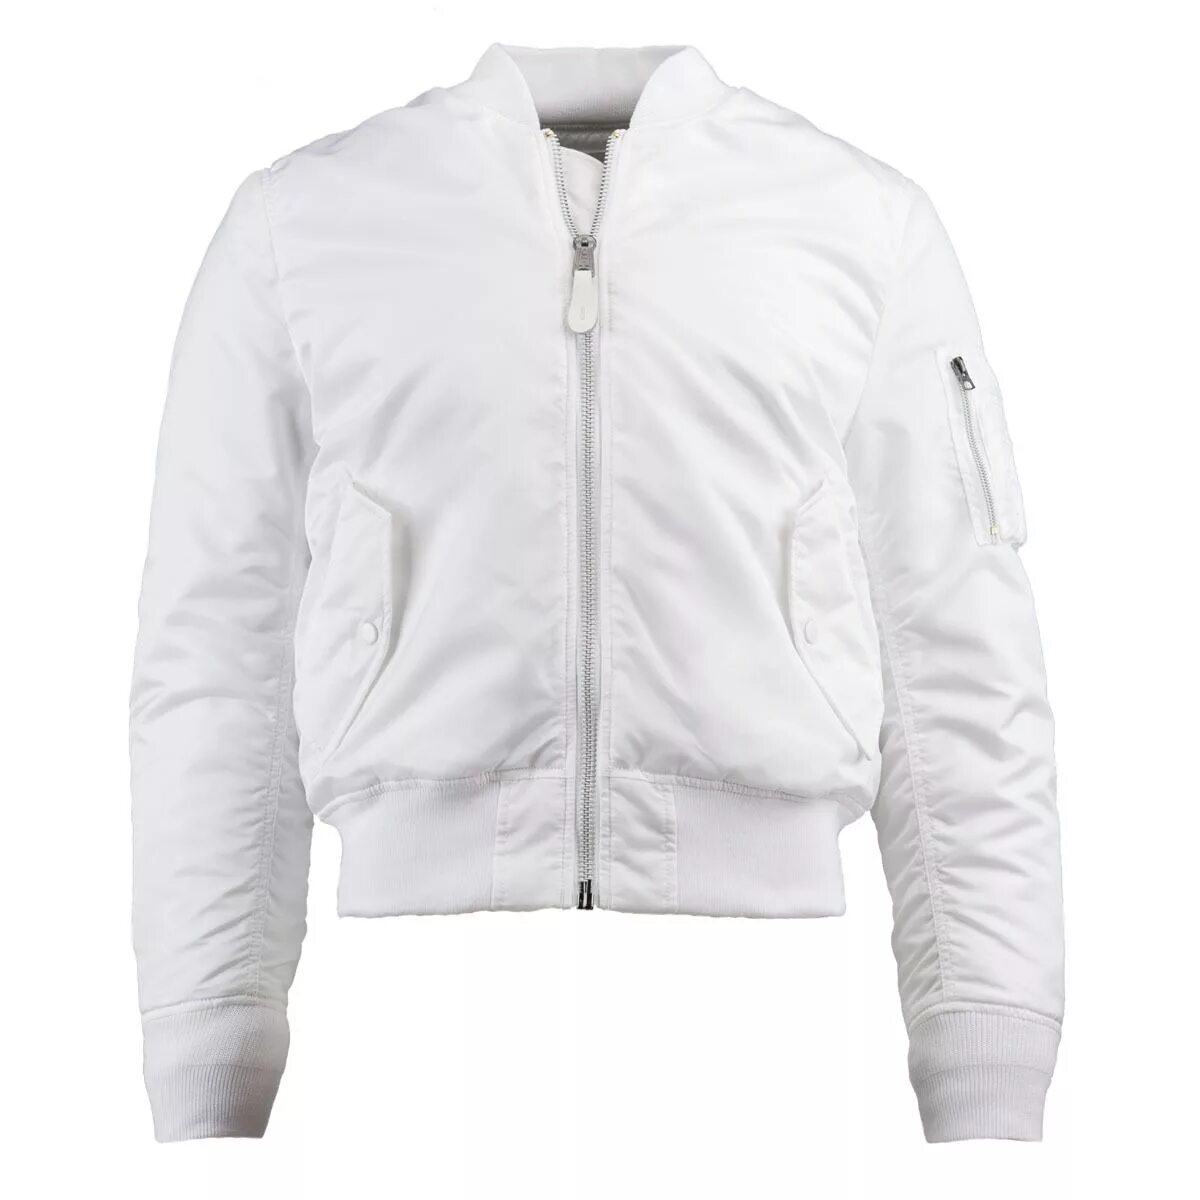 White jacket. Белый бомбер Alpha industries. White ma-1 Bomber Jacket. Белая куртка Альфа Индастриз. Куртка бомбер Альфа Индастриз белая.